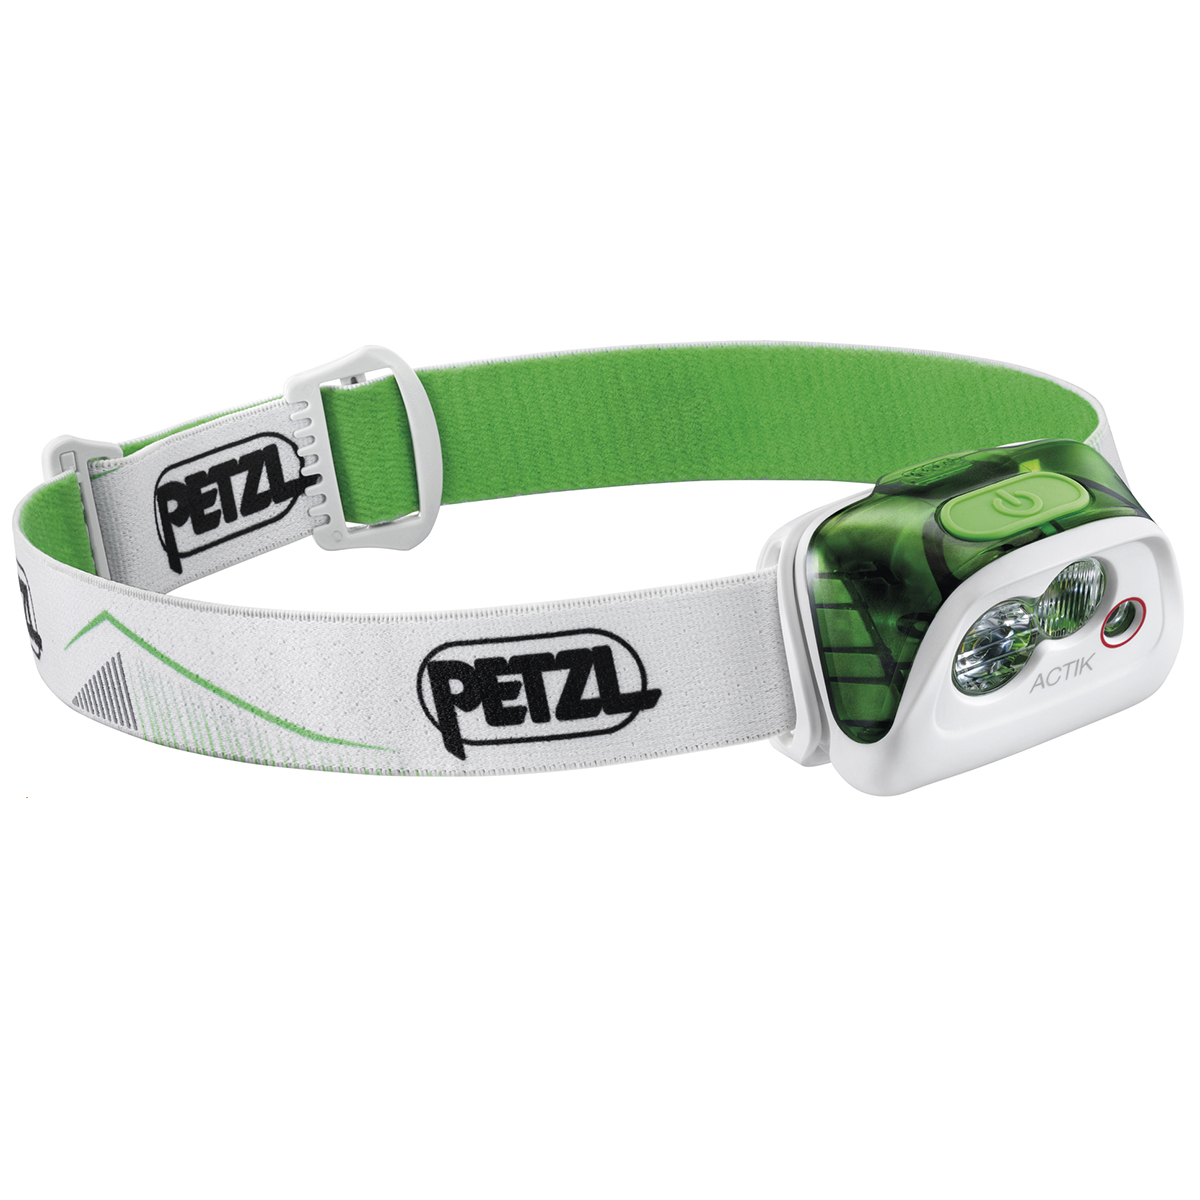 Petzl Actik Multi-Beam Headlamp, Green